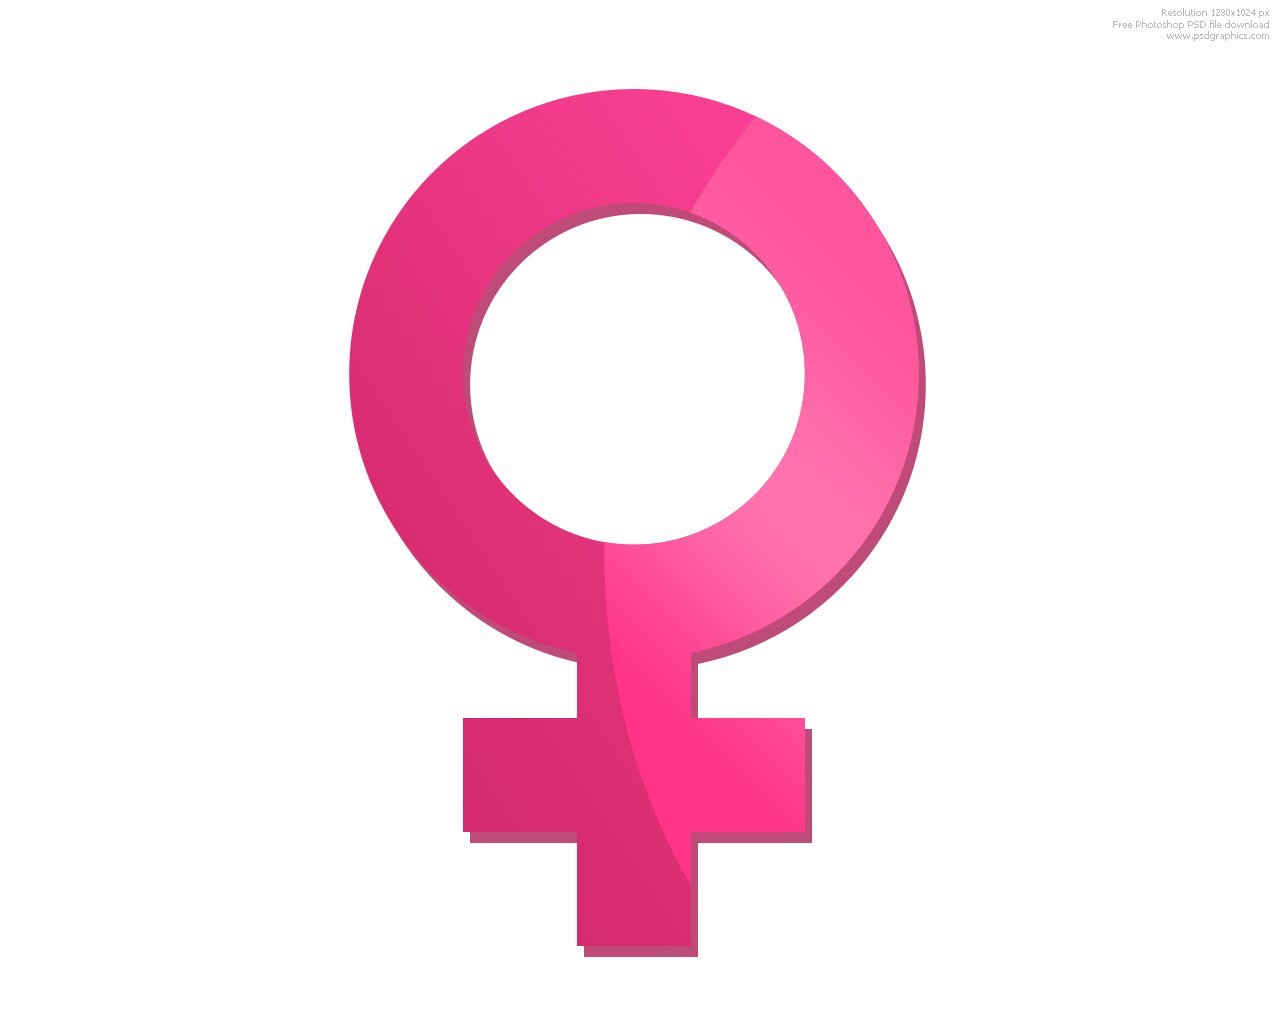 http://www.psdgraphics.com/file/female-gender-sign.jpg